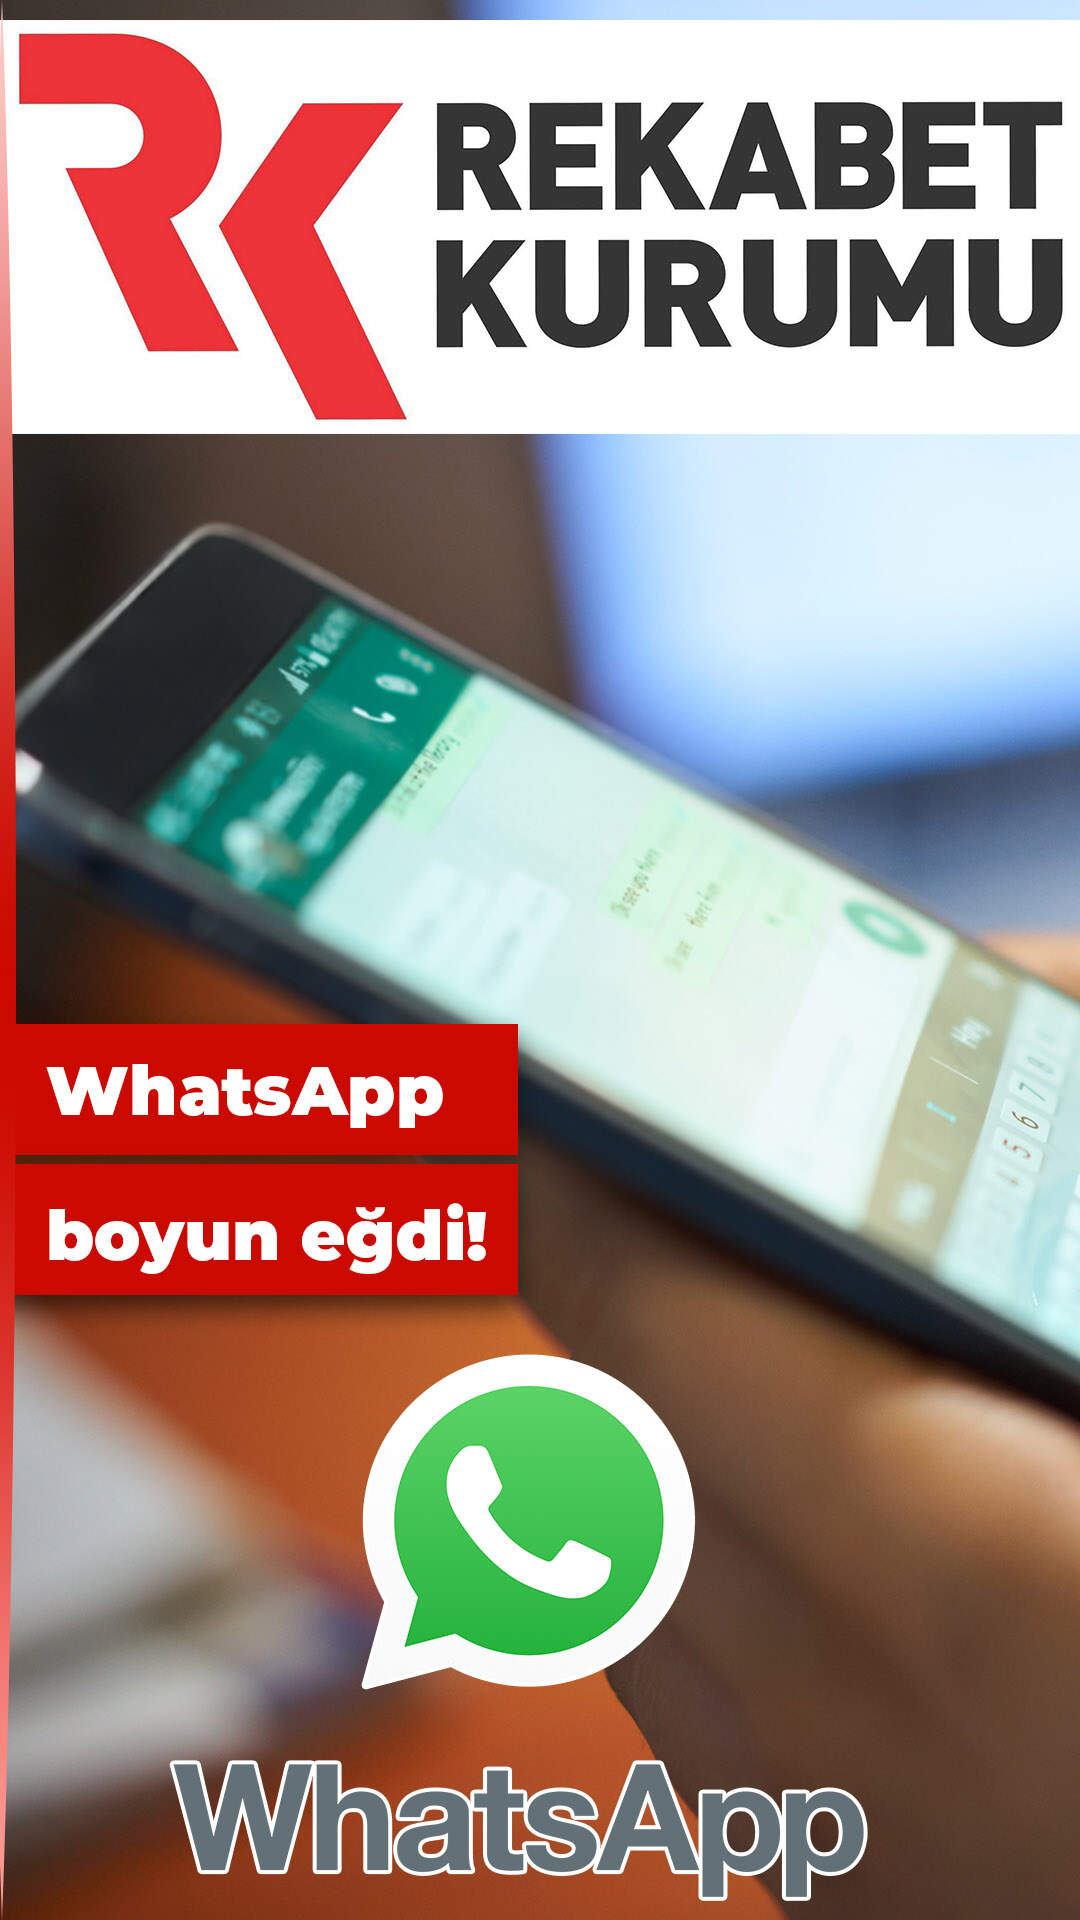 Rekabet Kurumu, WhatsApp’a geri adım attırdı!